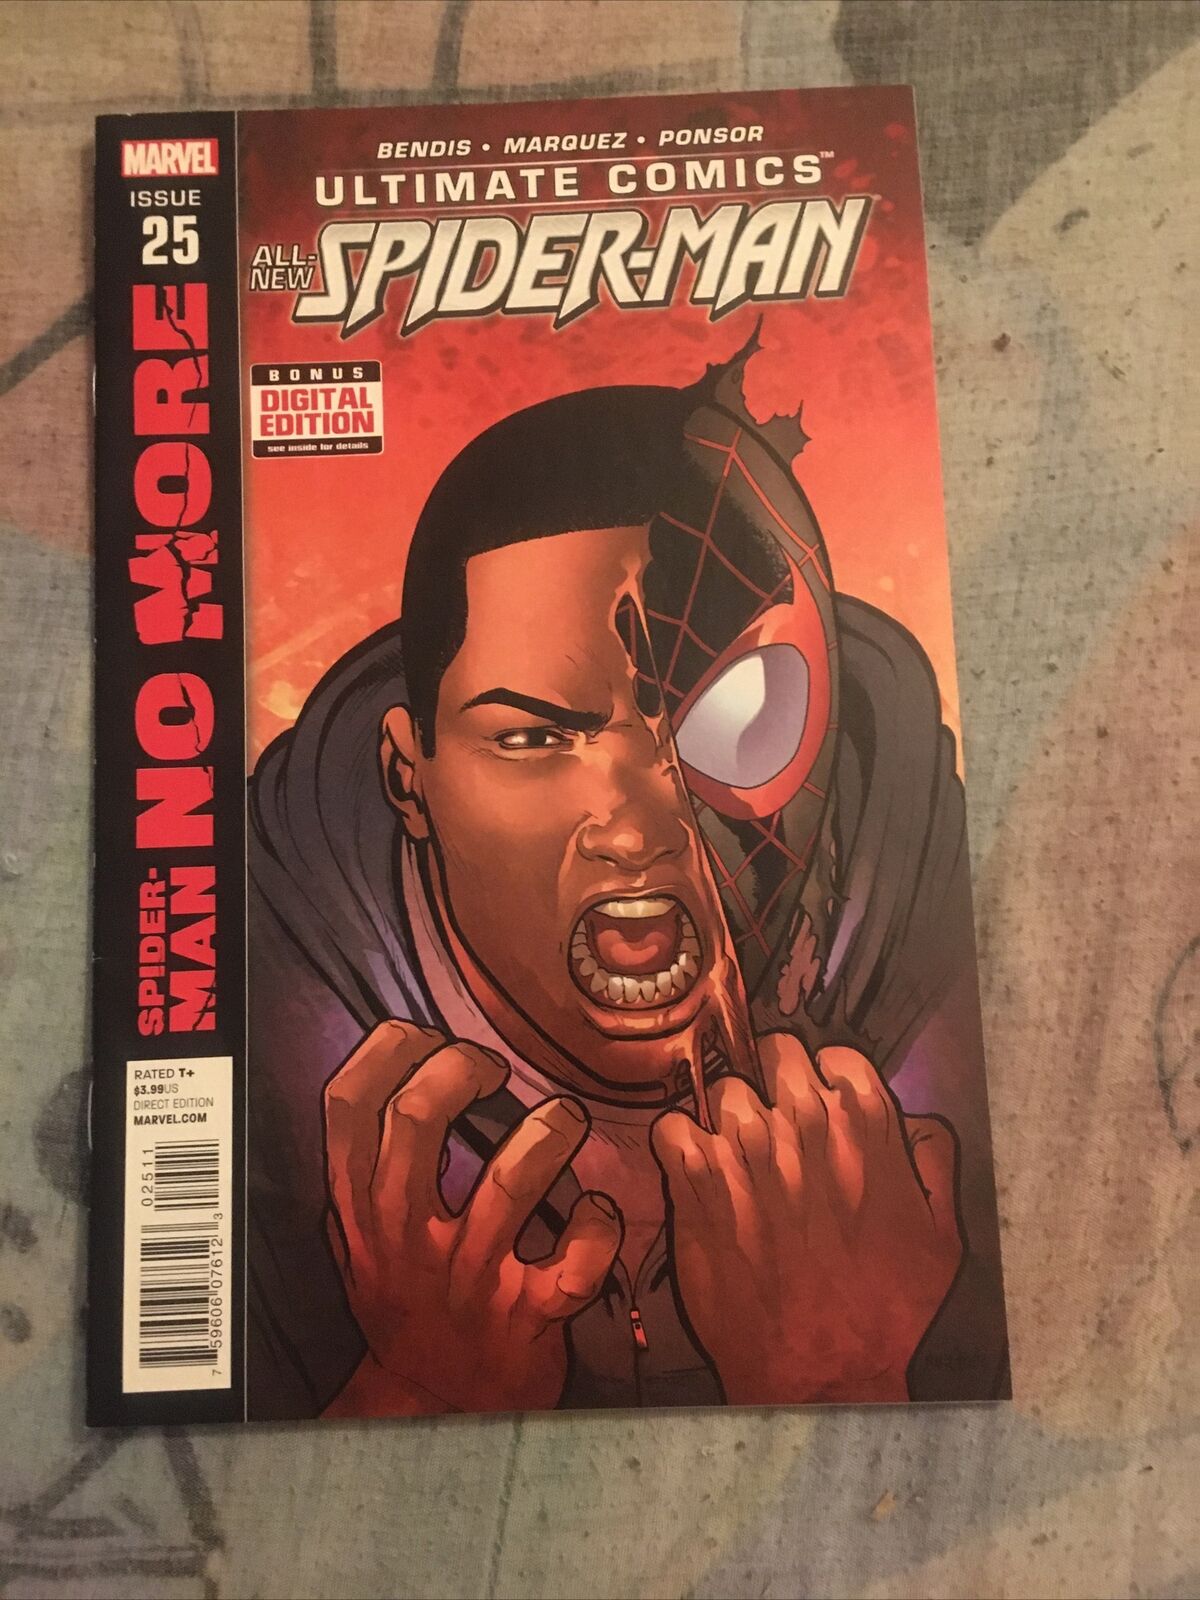 ULTIMATE COMICS All-New SPIDER-MAN #25 Miles Morales Cover Marvel Comics 2013